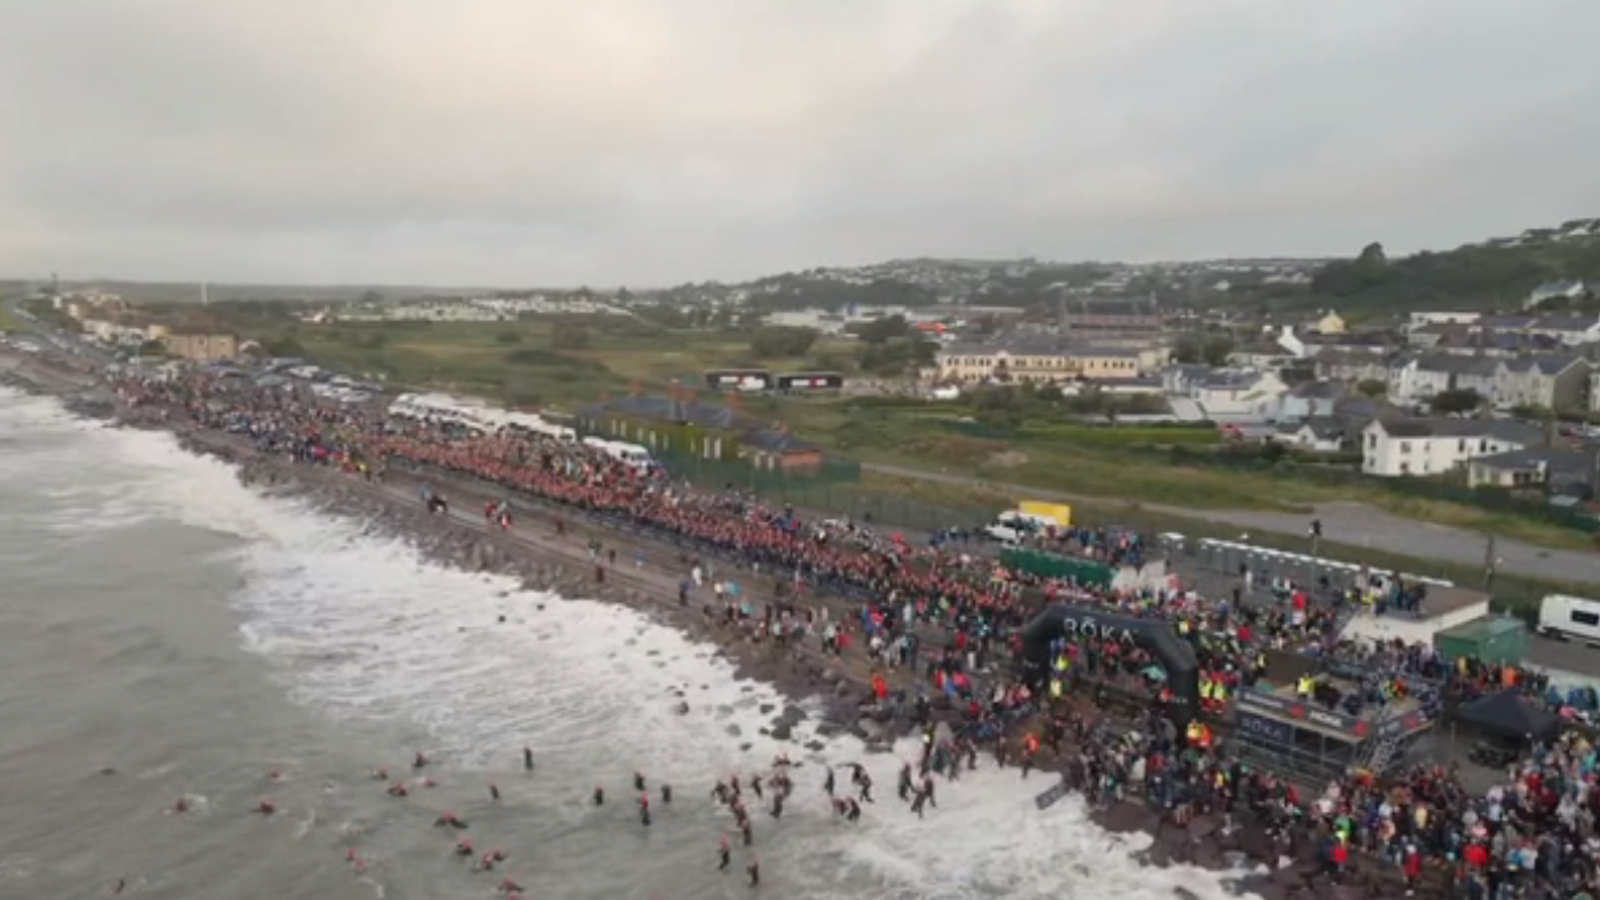 Triathlon Ireland says it did not 'sanction' Ironman swim race in which two men died in Co Cork